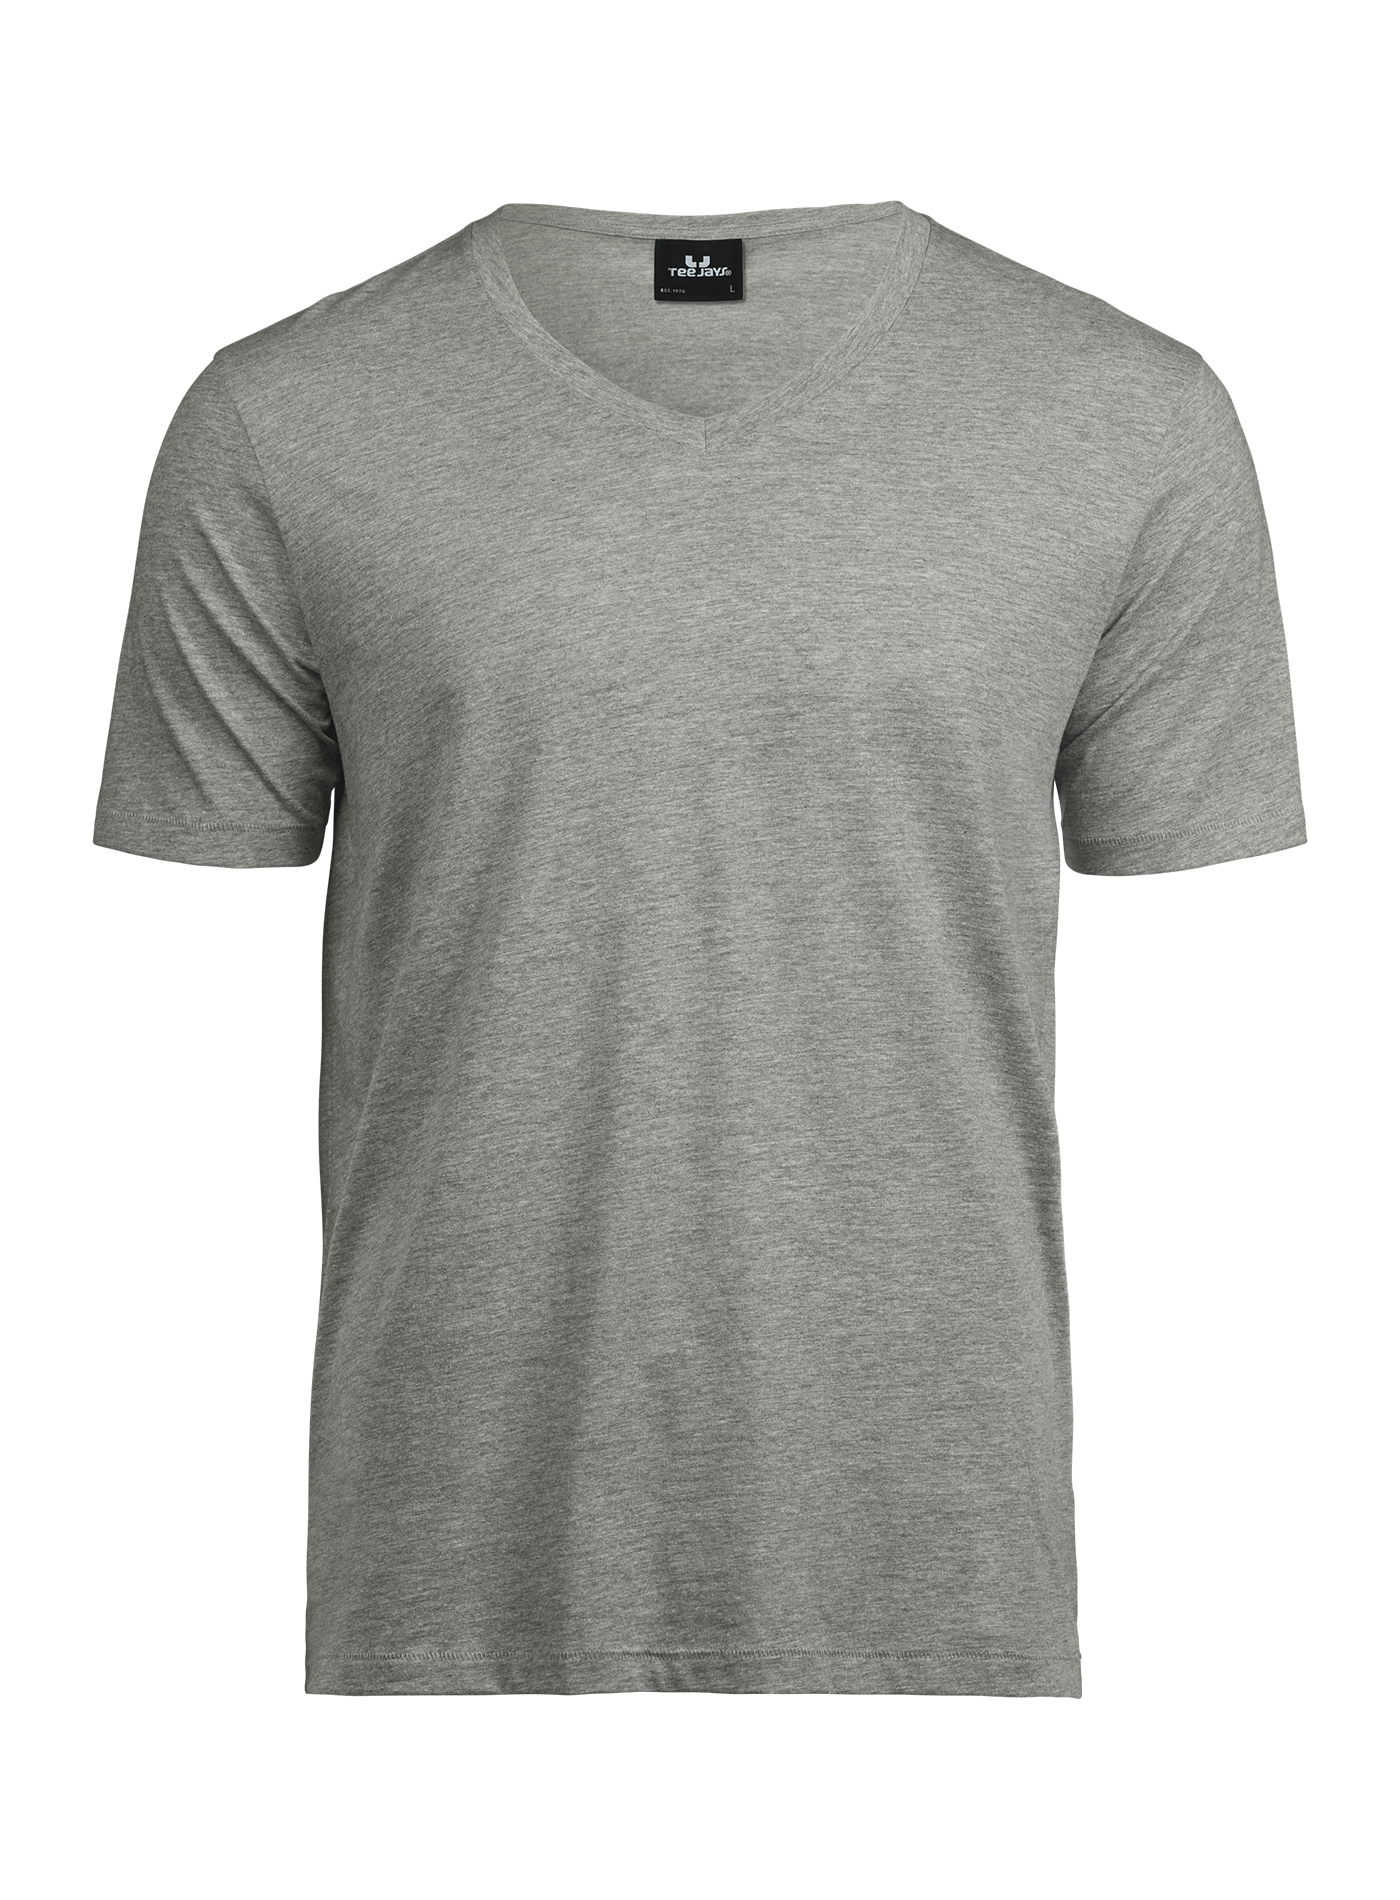 Pánské tričko s výstřihem do V Tee Jays - šedý melír XL